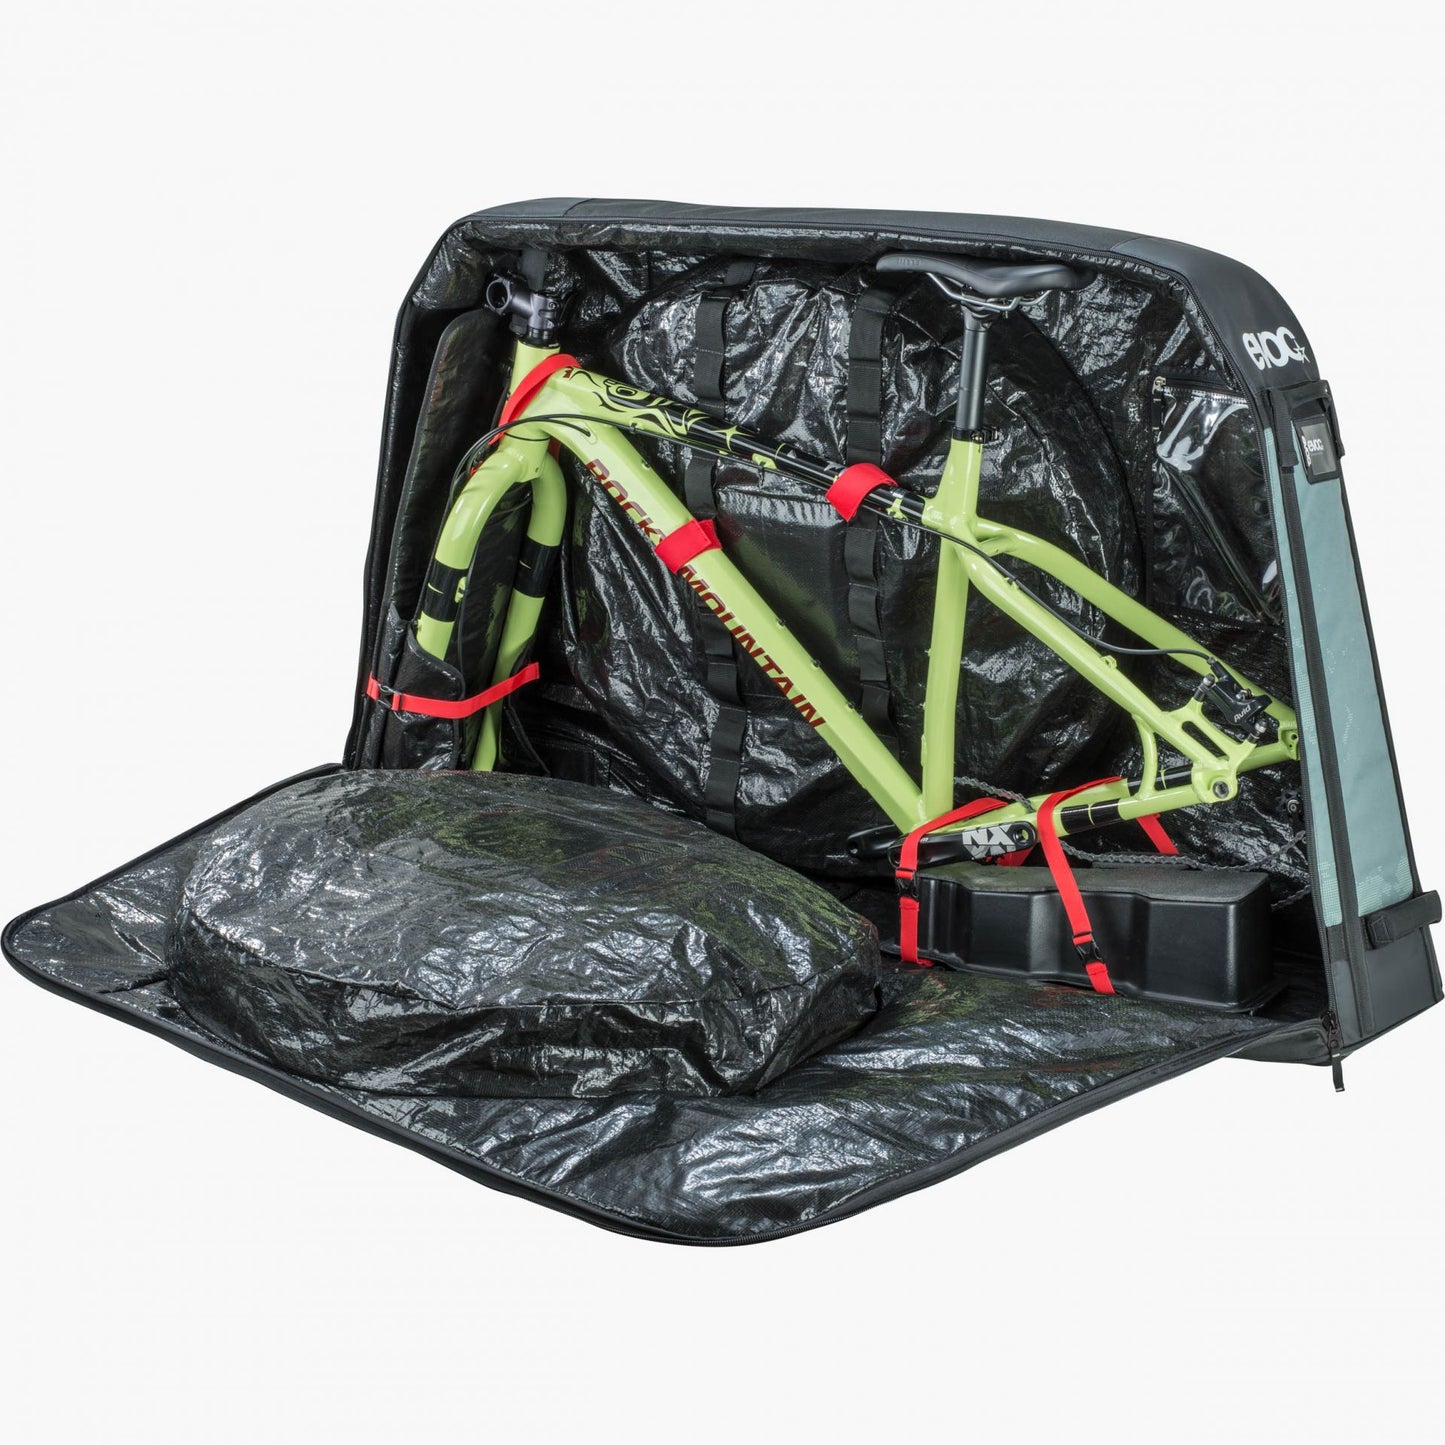 EVOC Bike Travel Bag XL - Bike Travel Bag for Fat Bikes and Plus Bikes